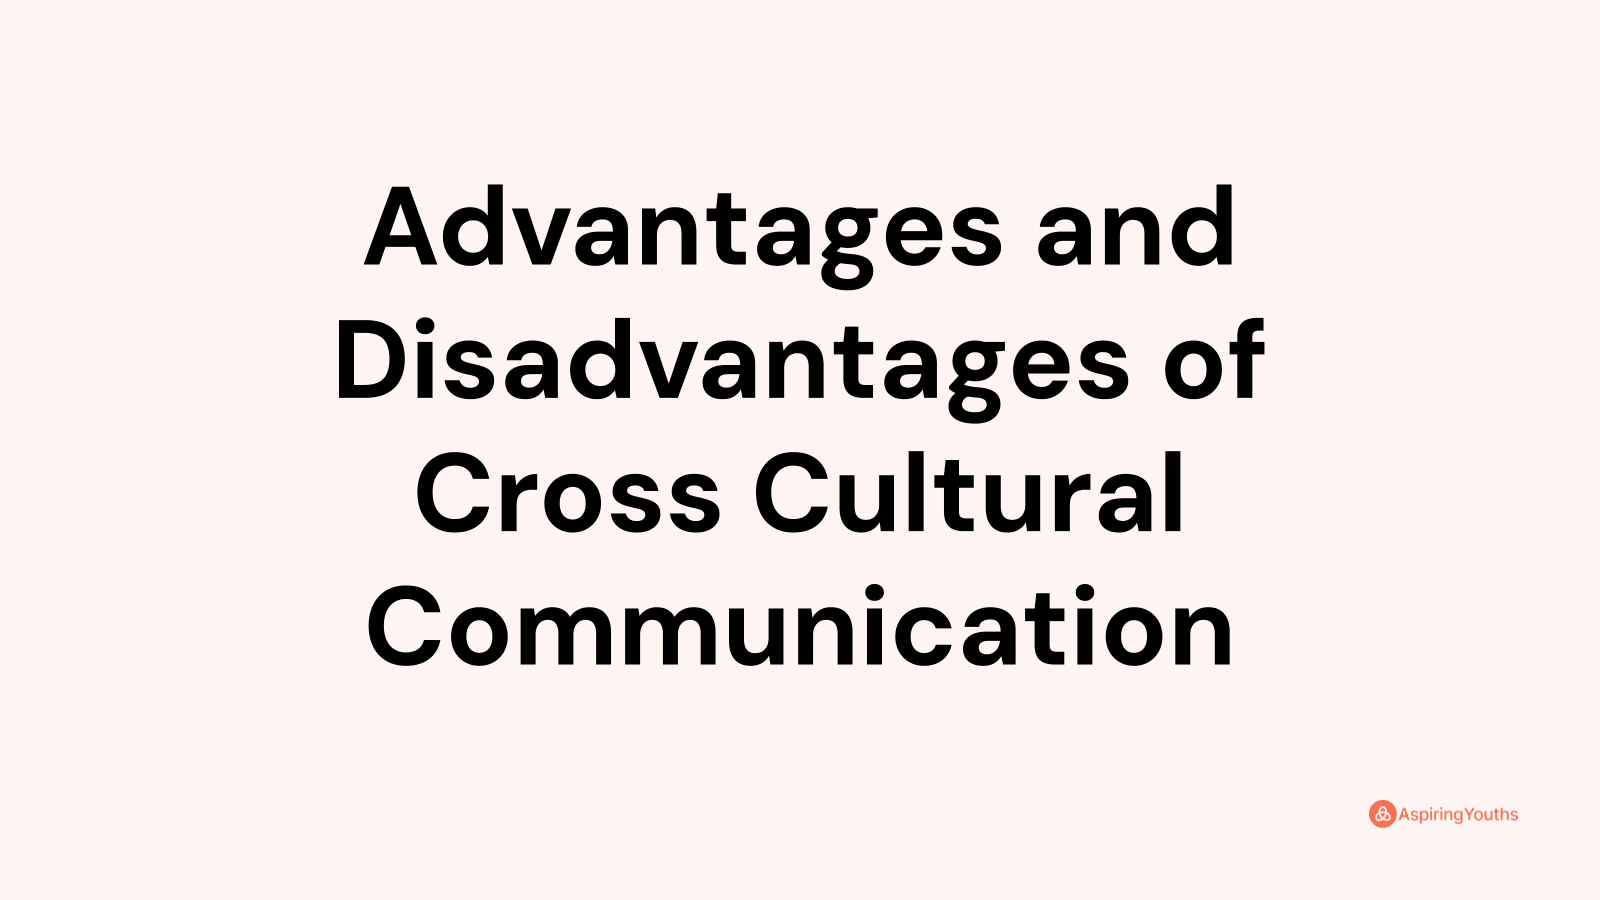 Advantages and disadvantages of Cross Cultural Communication